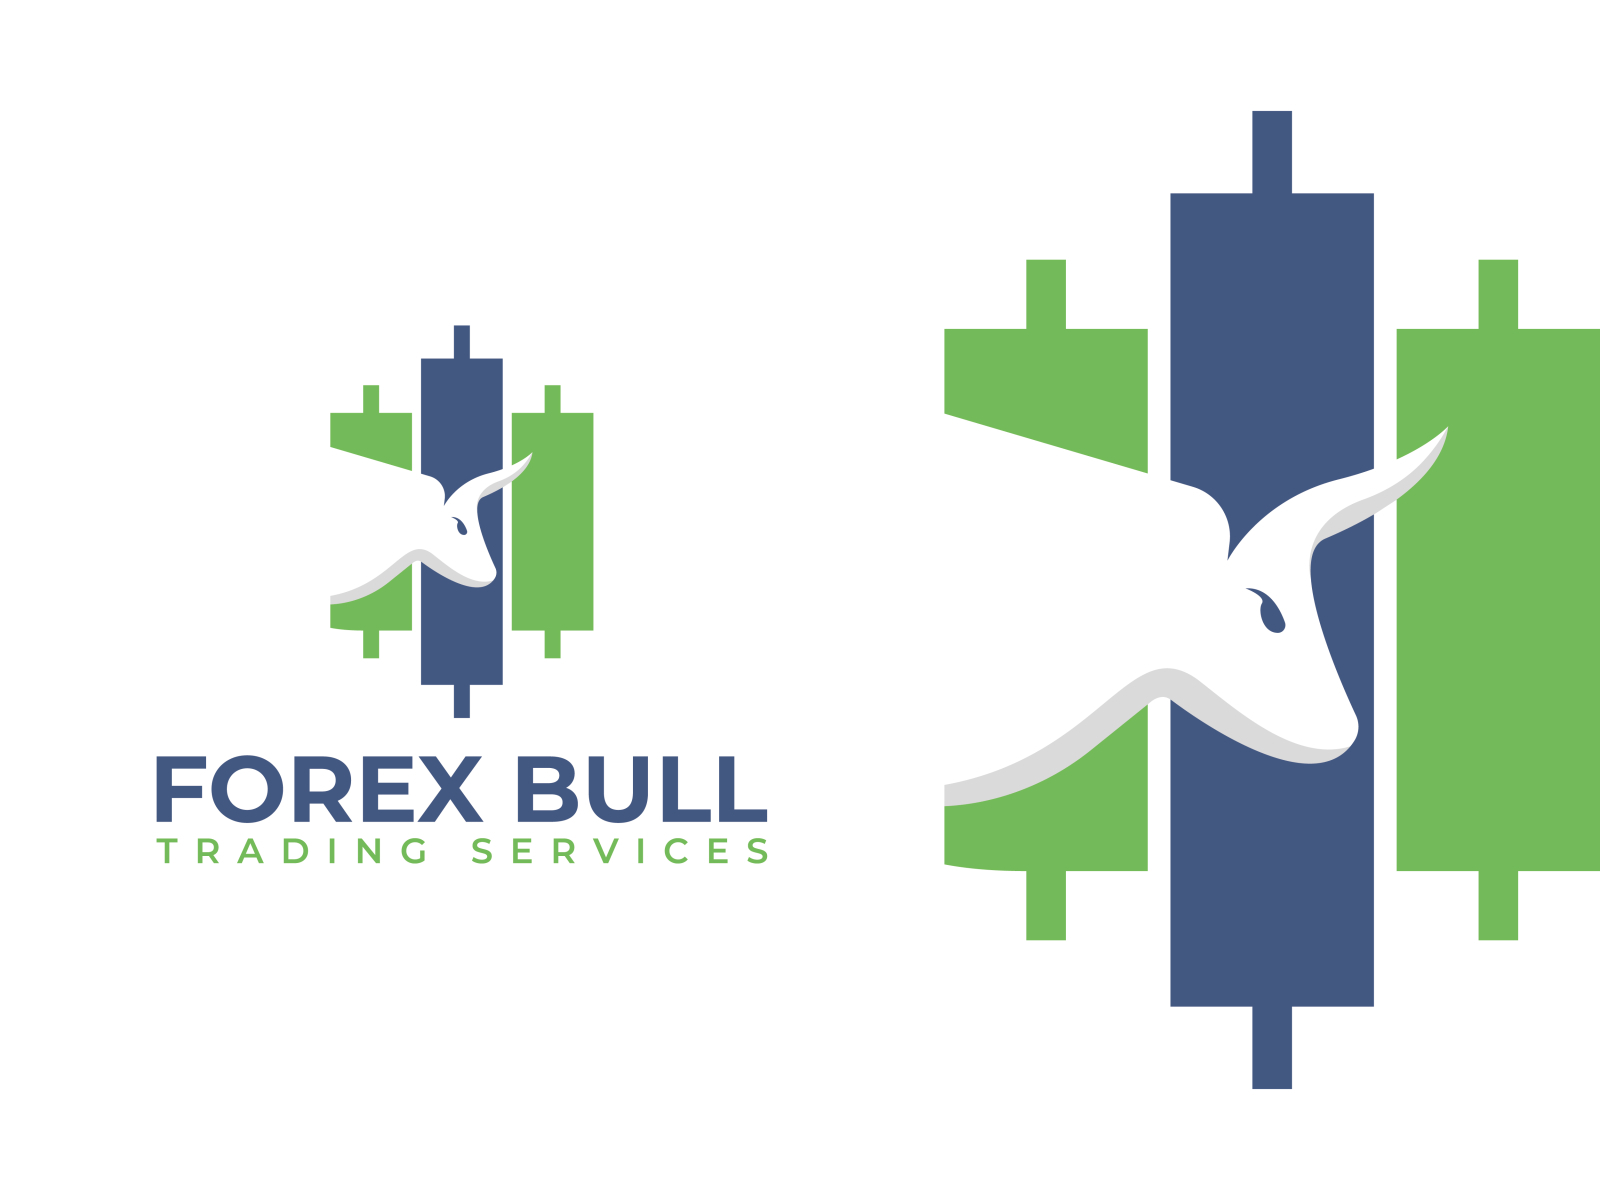 Bull Market Financial Investment Logo Design Stock Market Forex Trading  Stock Vector by ©artsterdam 449721116